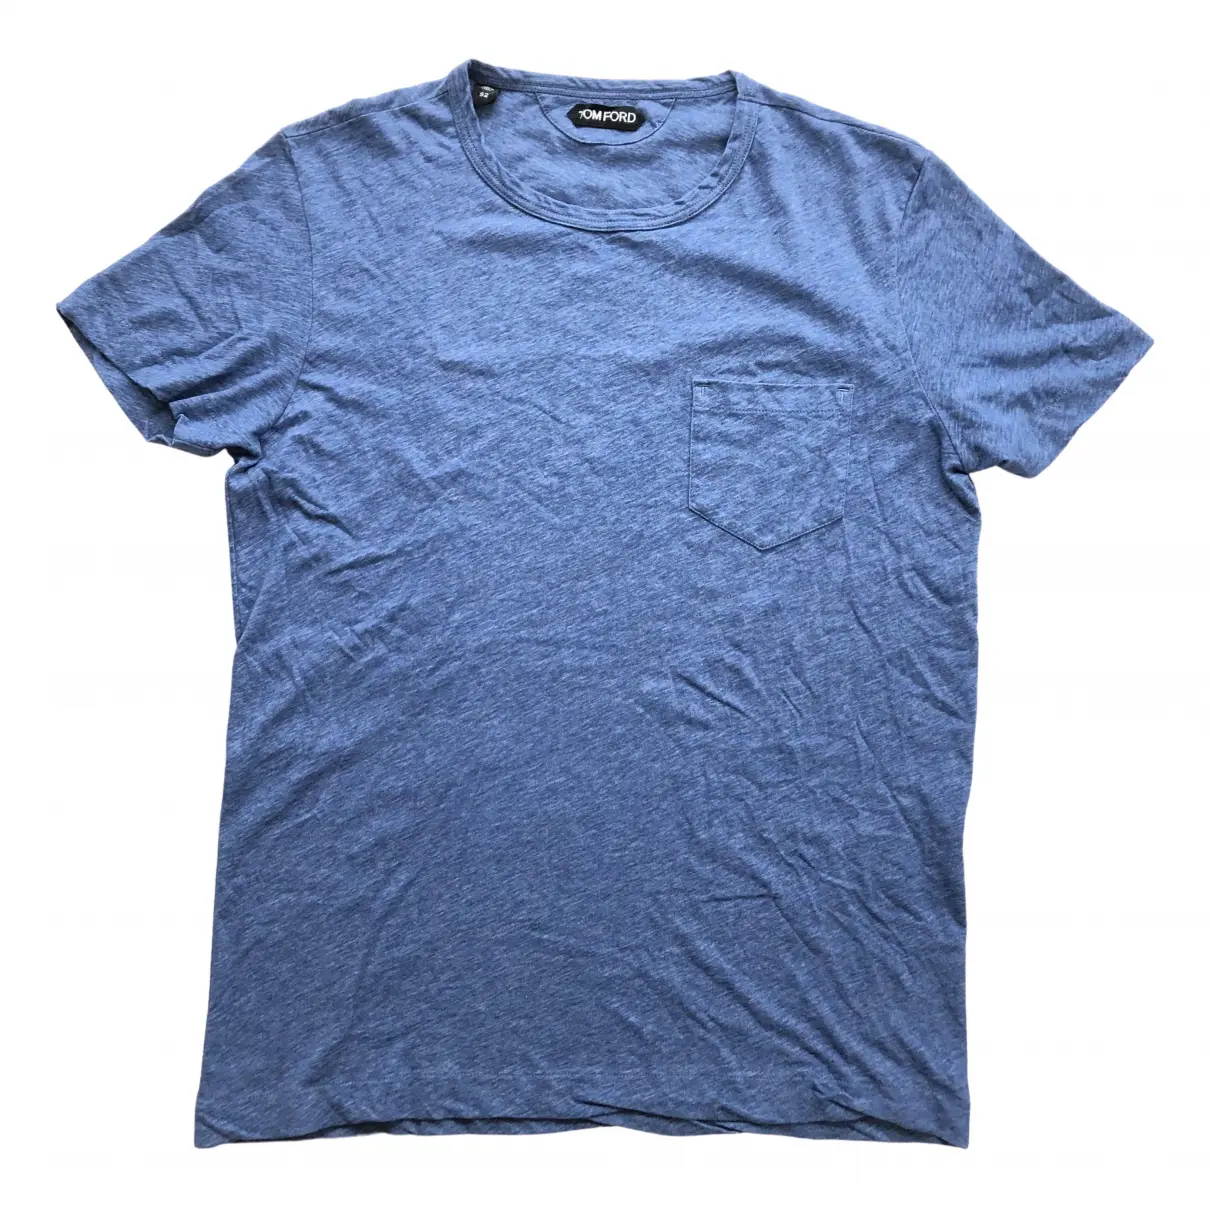 Blue Cotton T-shirt Tom Ford